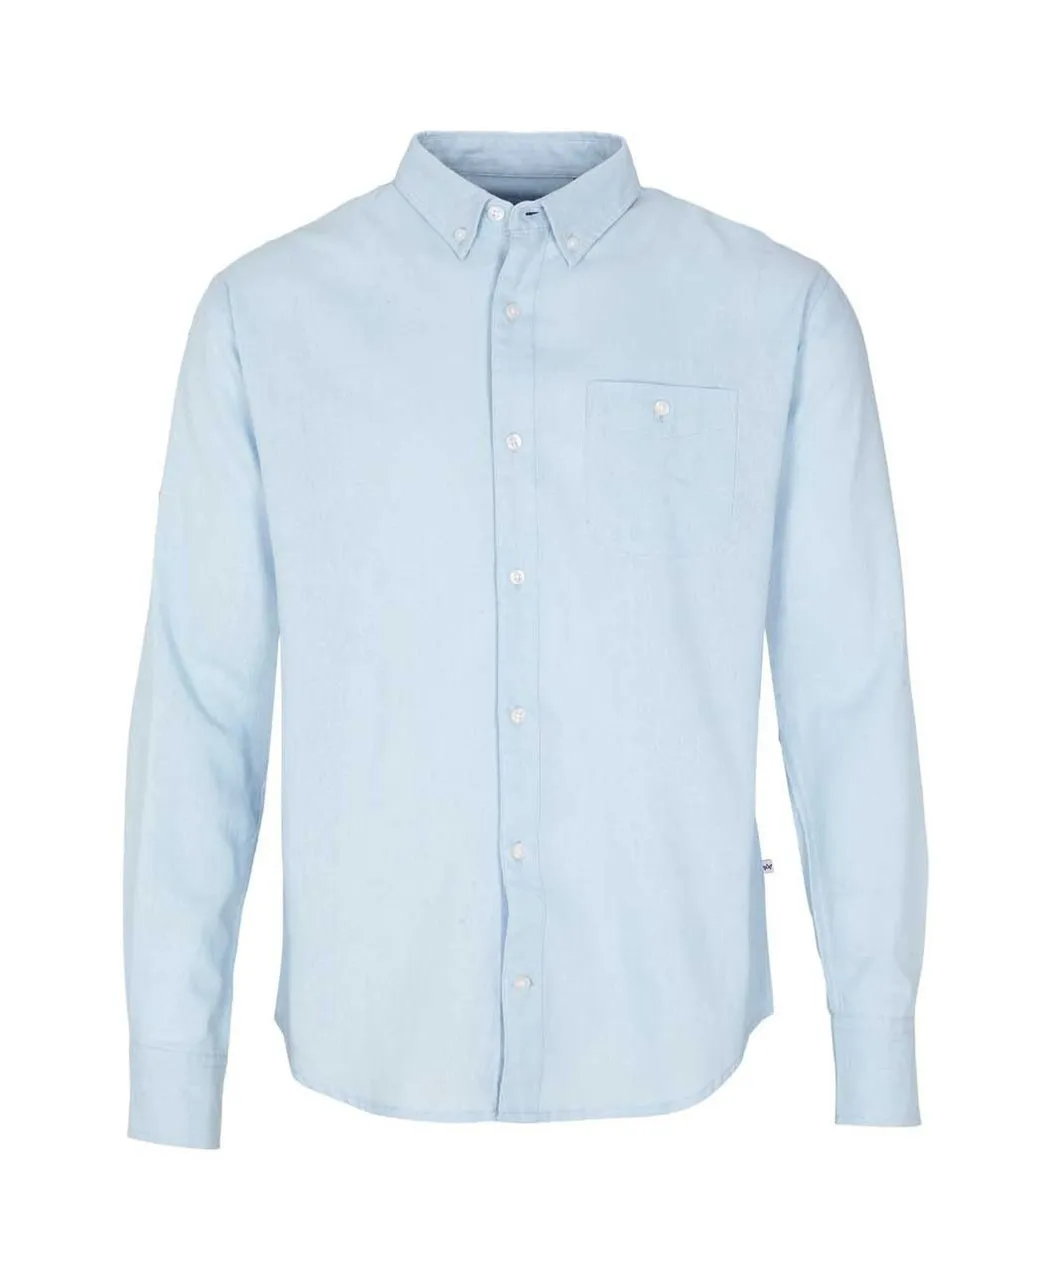 Kronstadt Ks3000 johan linen shirt regular light blue